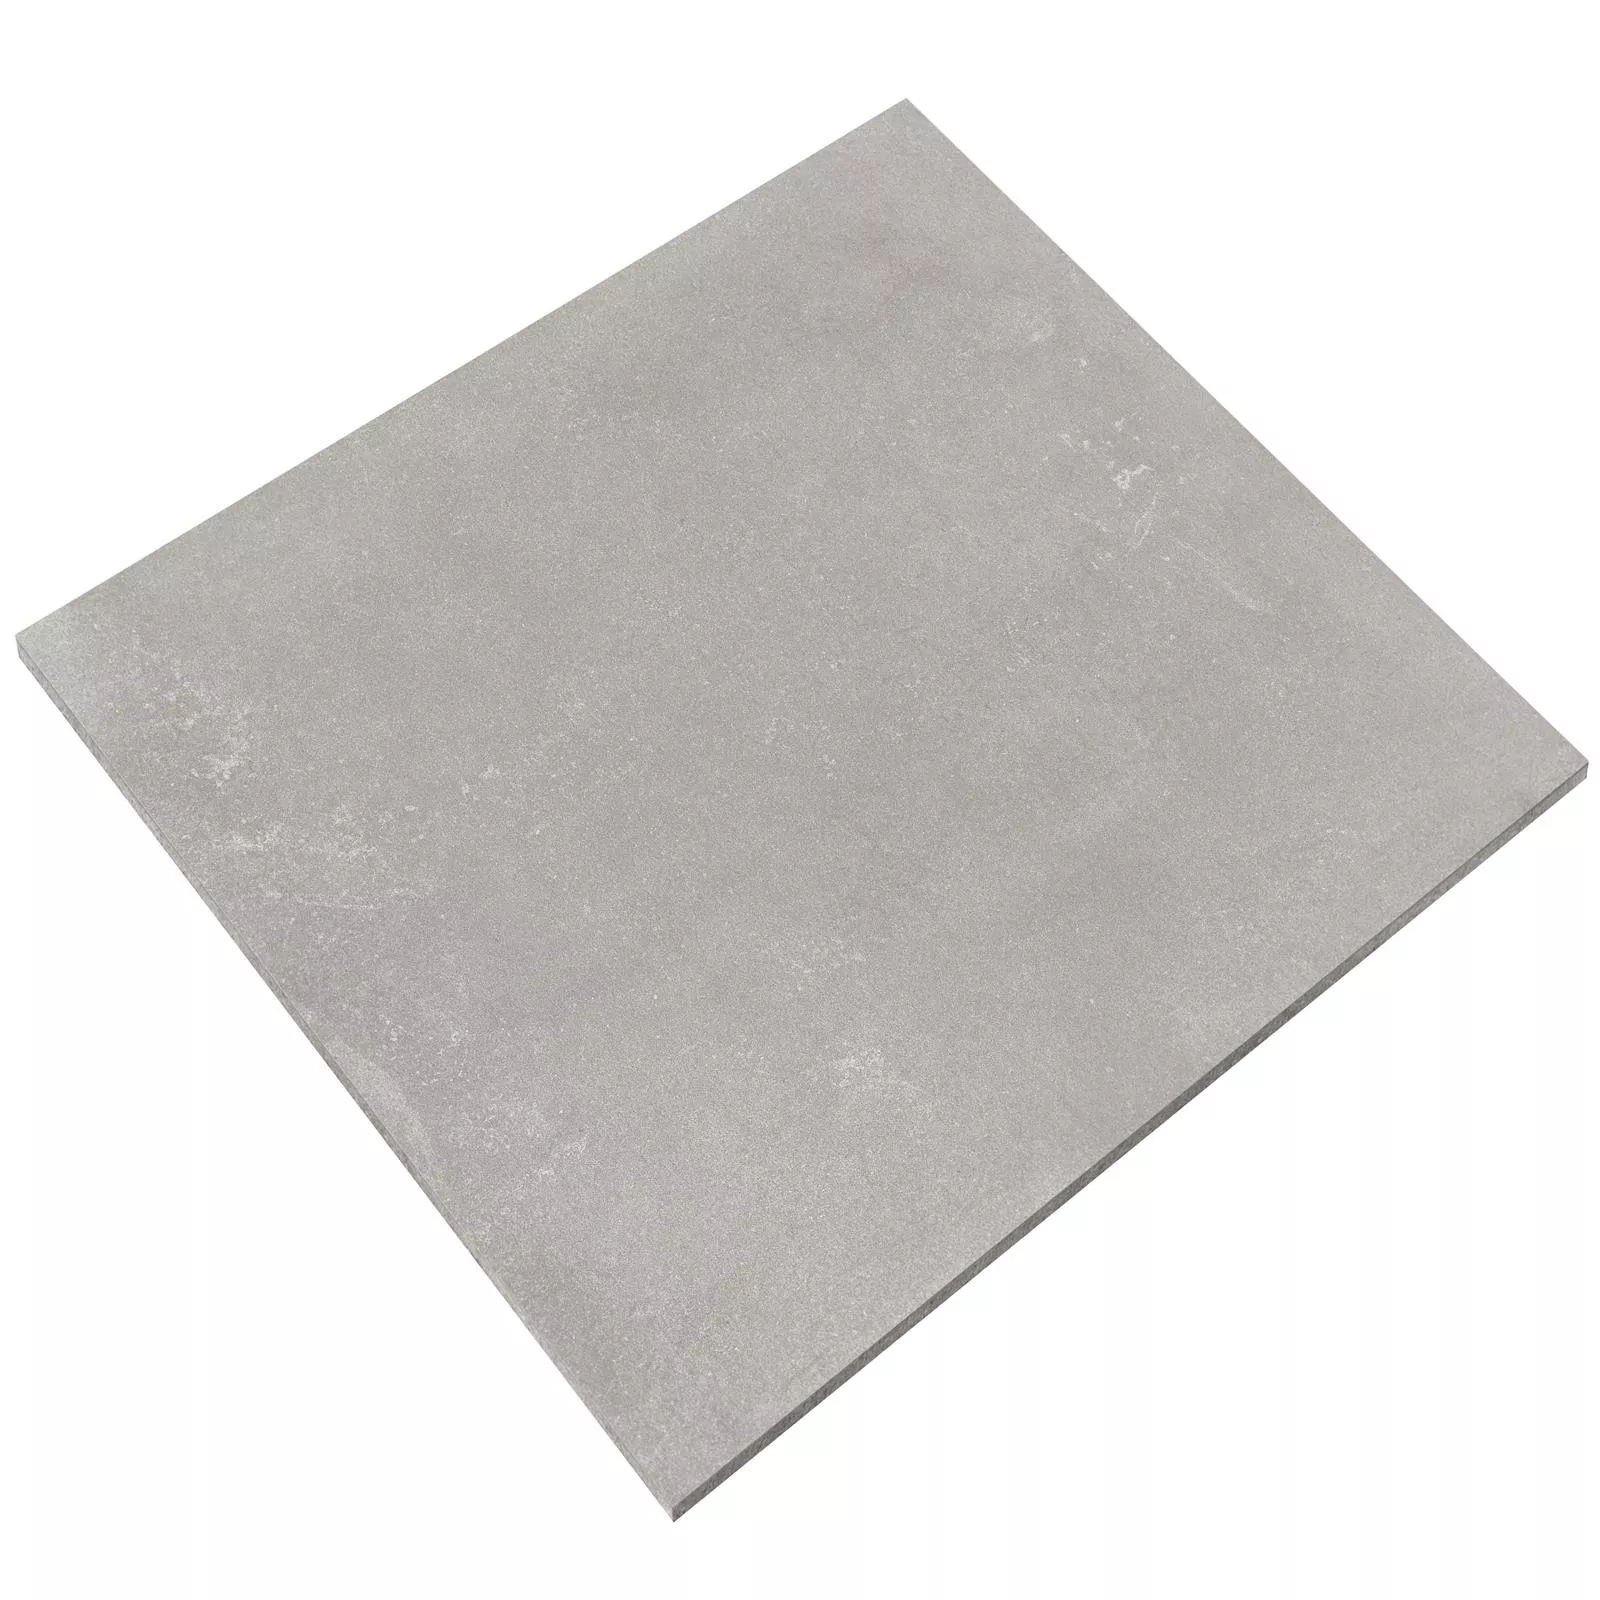 Sample Floor Tiles Cement Optic Nepal Slim Grey 60x60cm